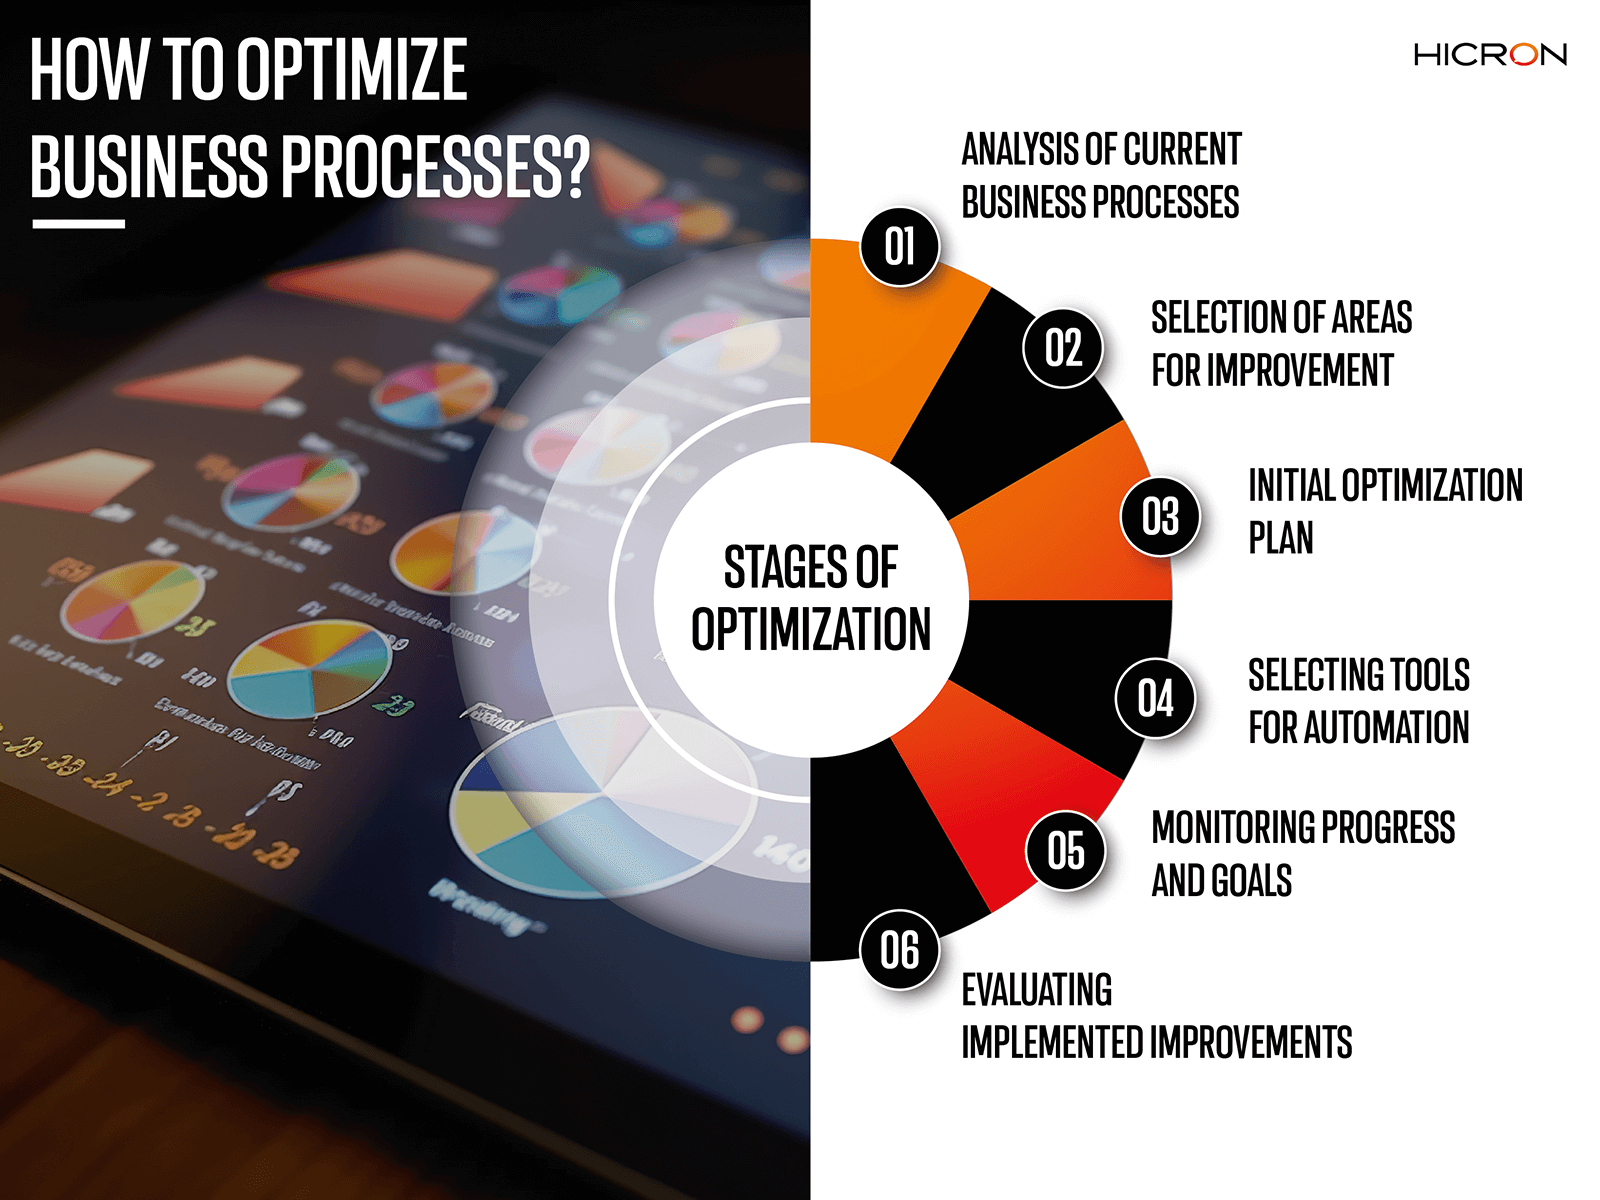 Process optimization methods